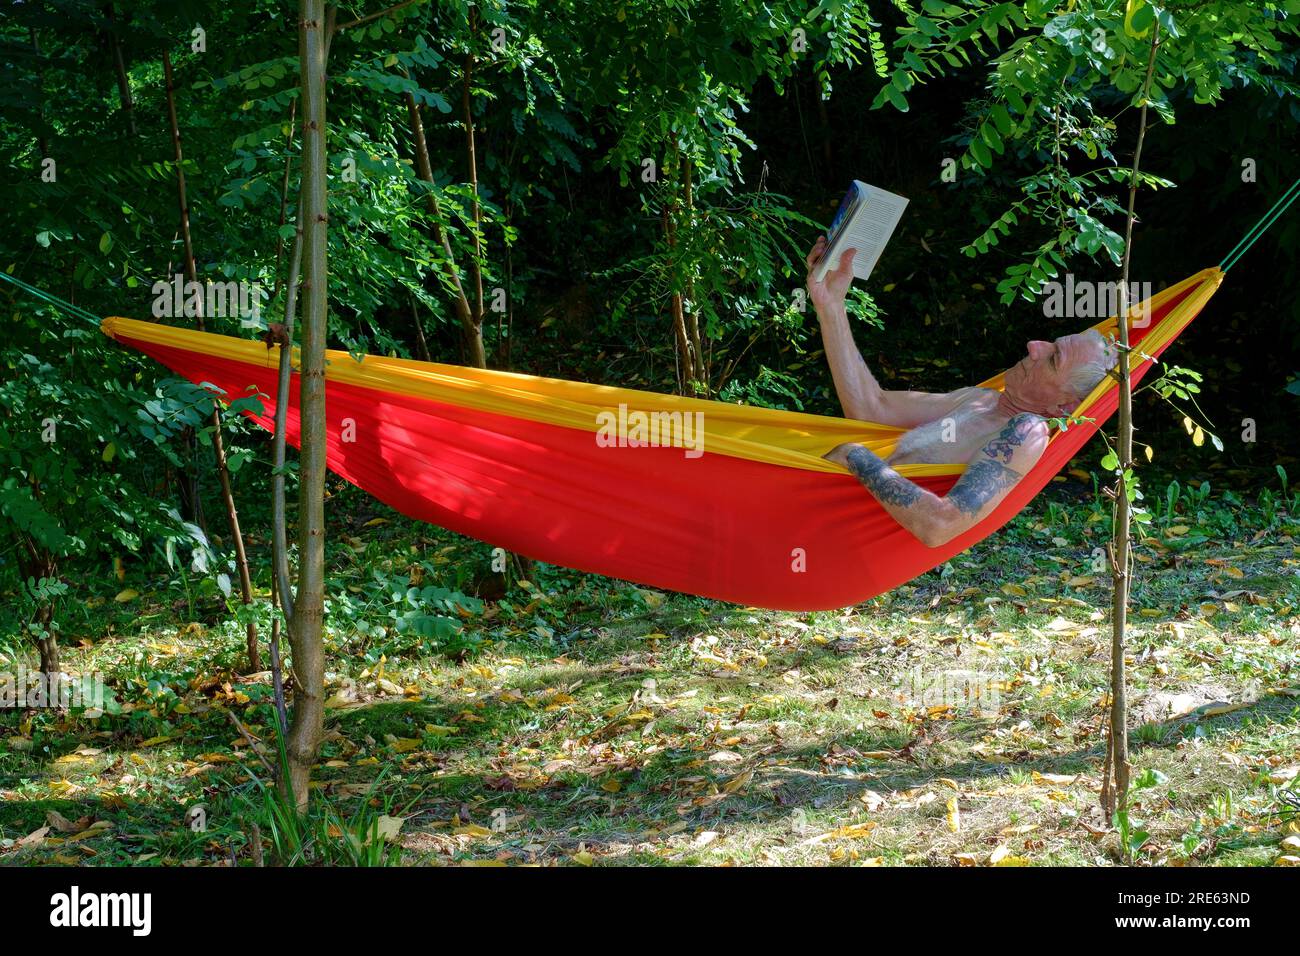 older man relaxing in garden hammock shaded by trees reading book zala county hungary Stock Photo